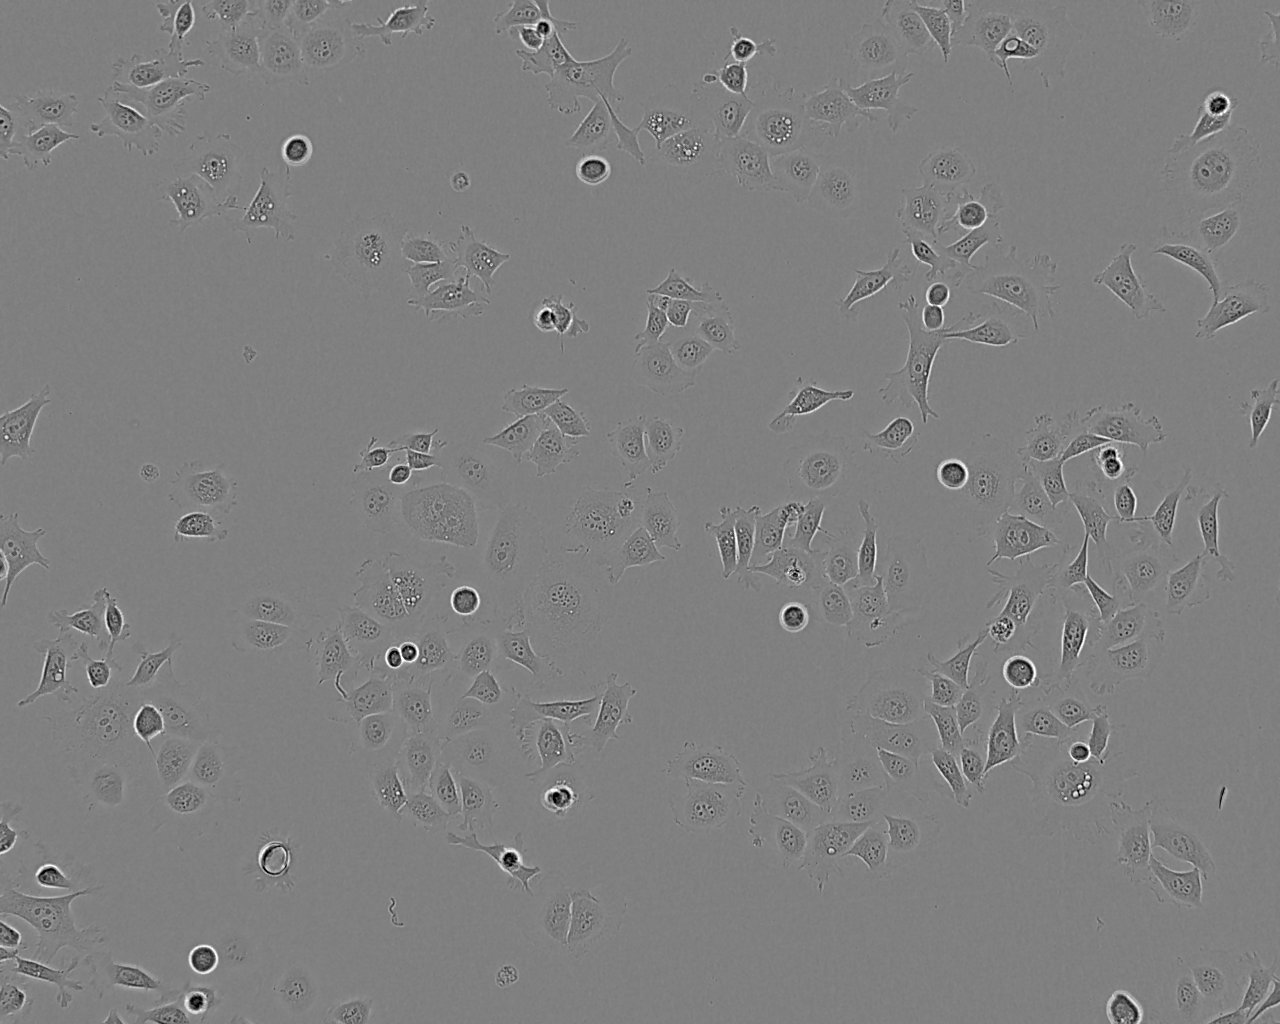 KLN205 Cell|小鼠肺鳞癌细胞